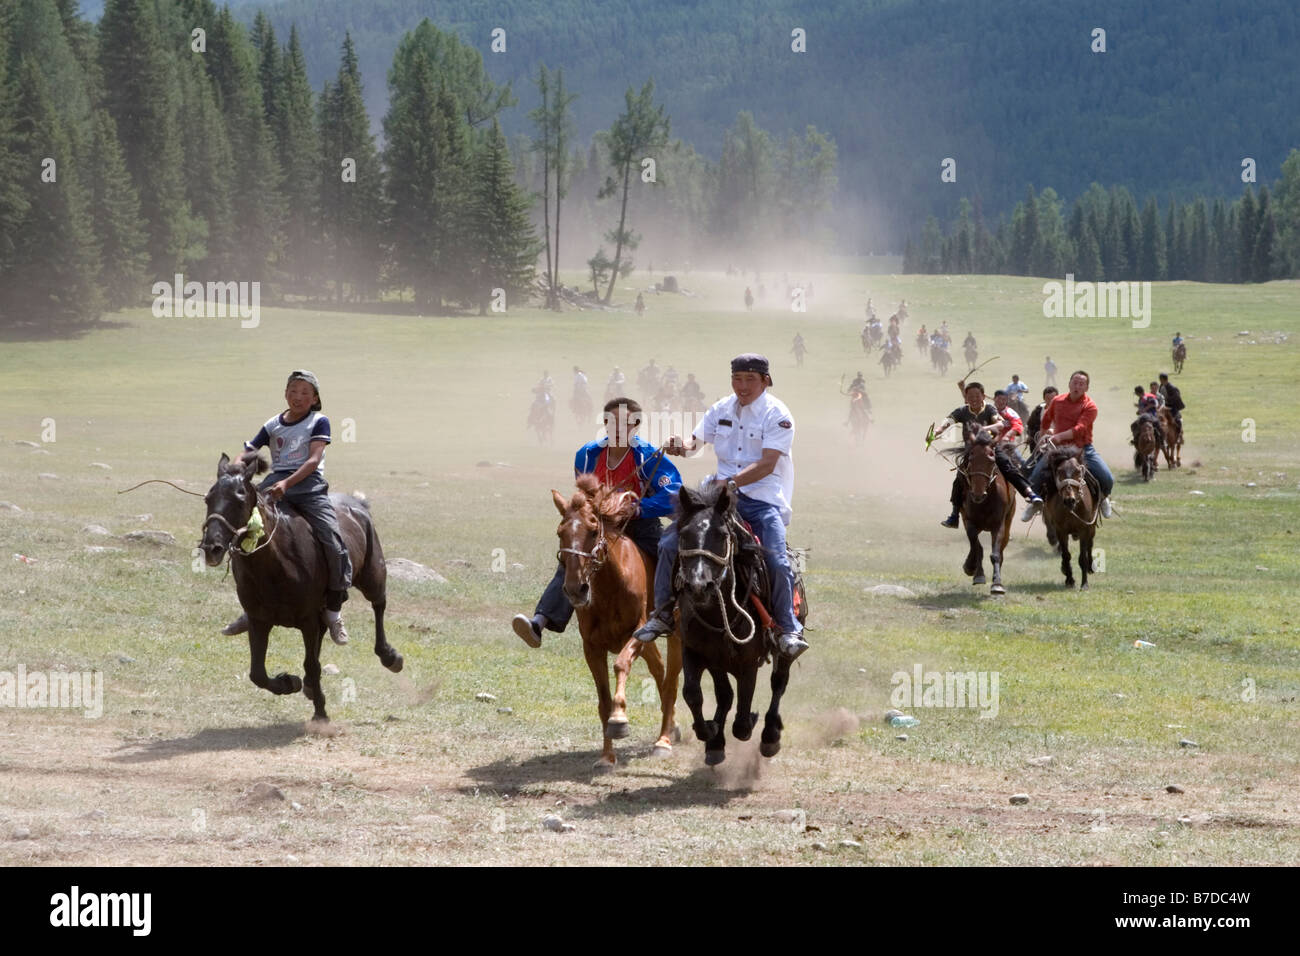 Carreras de caballos mongoles durante la competencia anual denominada Ao Bao Jie. Foto de stock